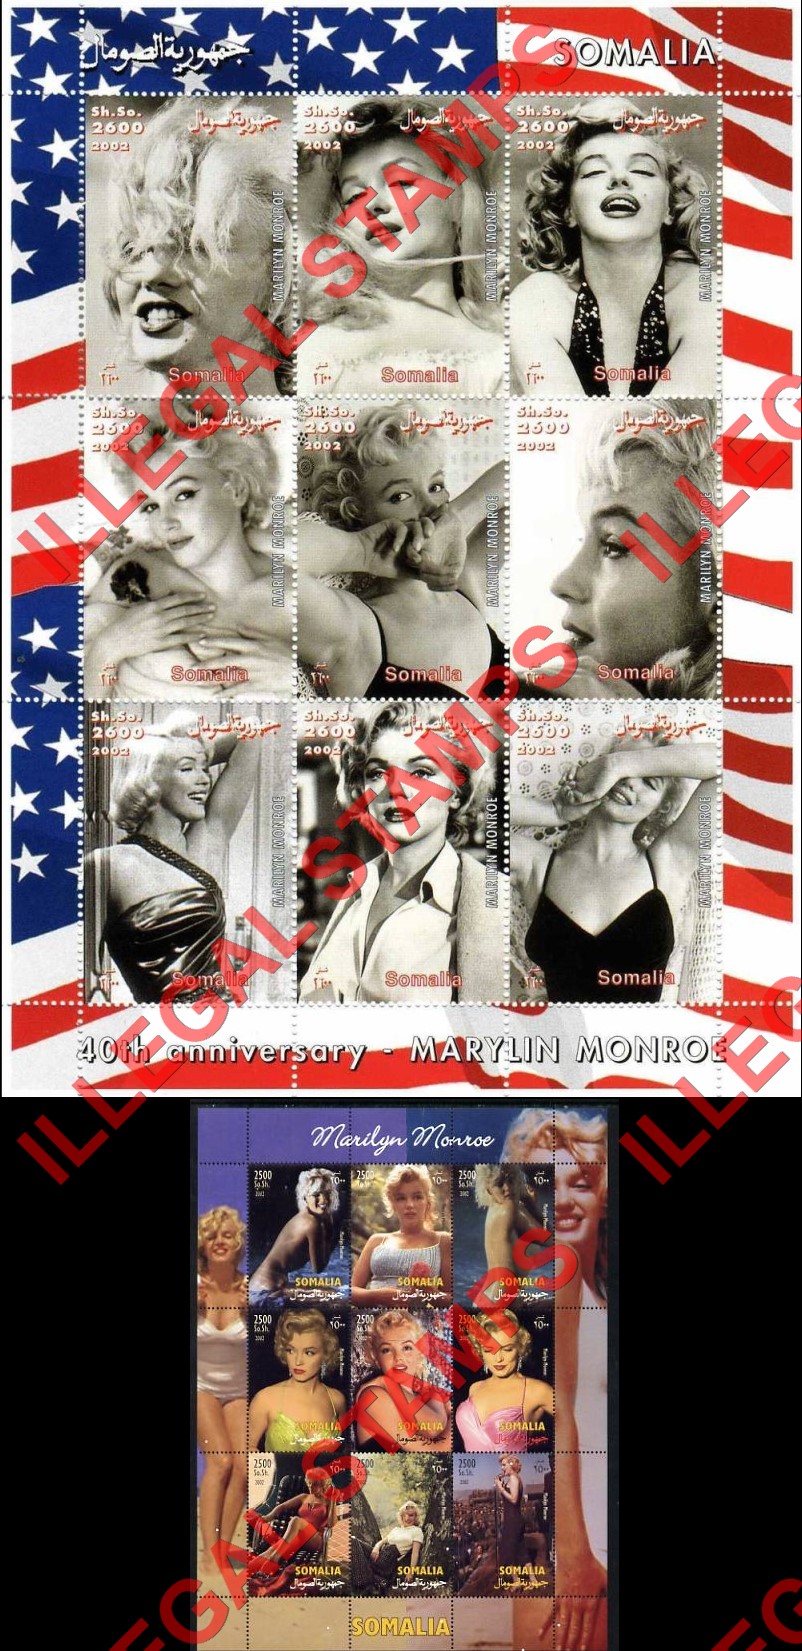 Somalia 2002 Marilyn Monroe Illegal Stamp Souvenir Sheets of 9